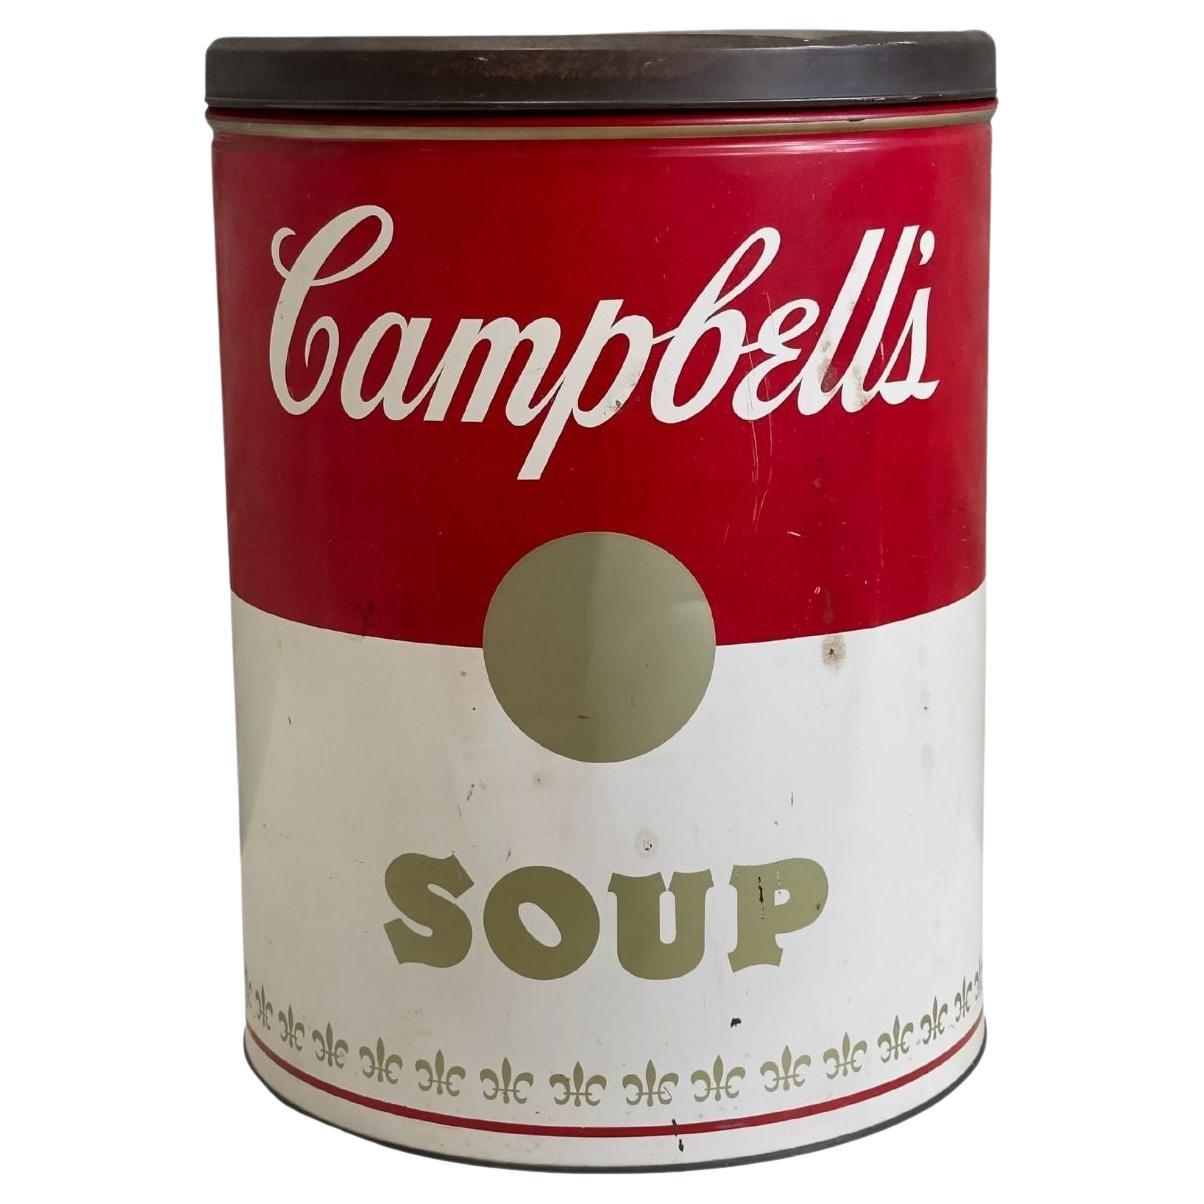 Plasticonvertible Corp. Campbell's Soup kann, 1960